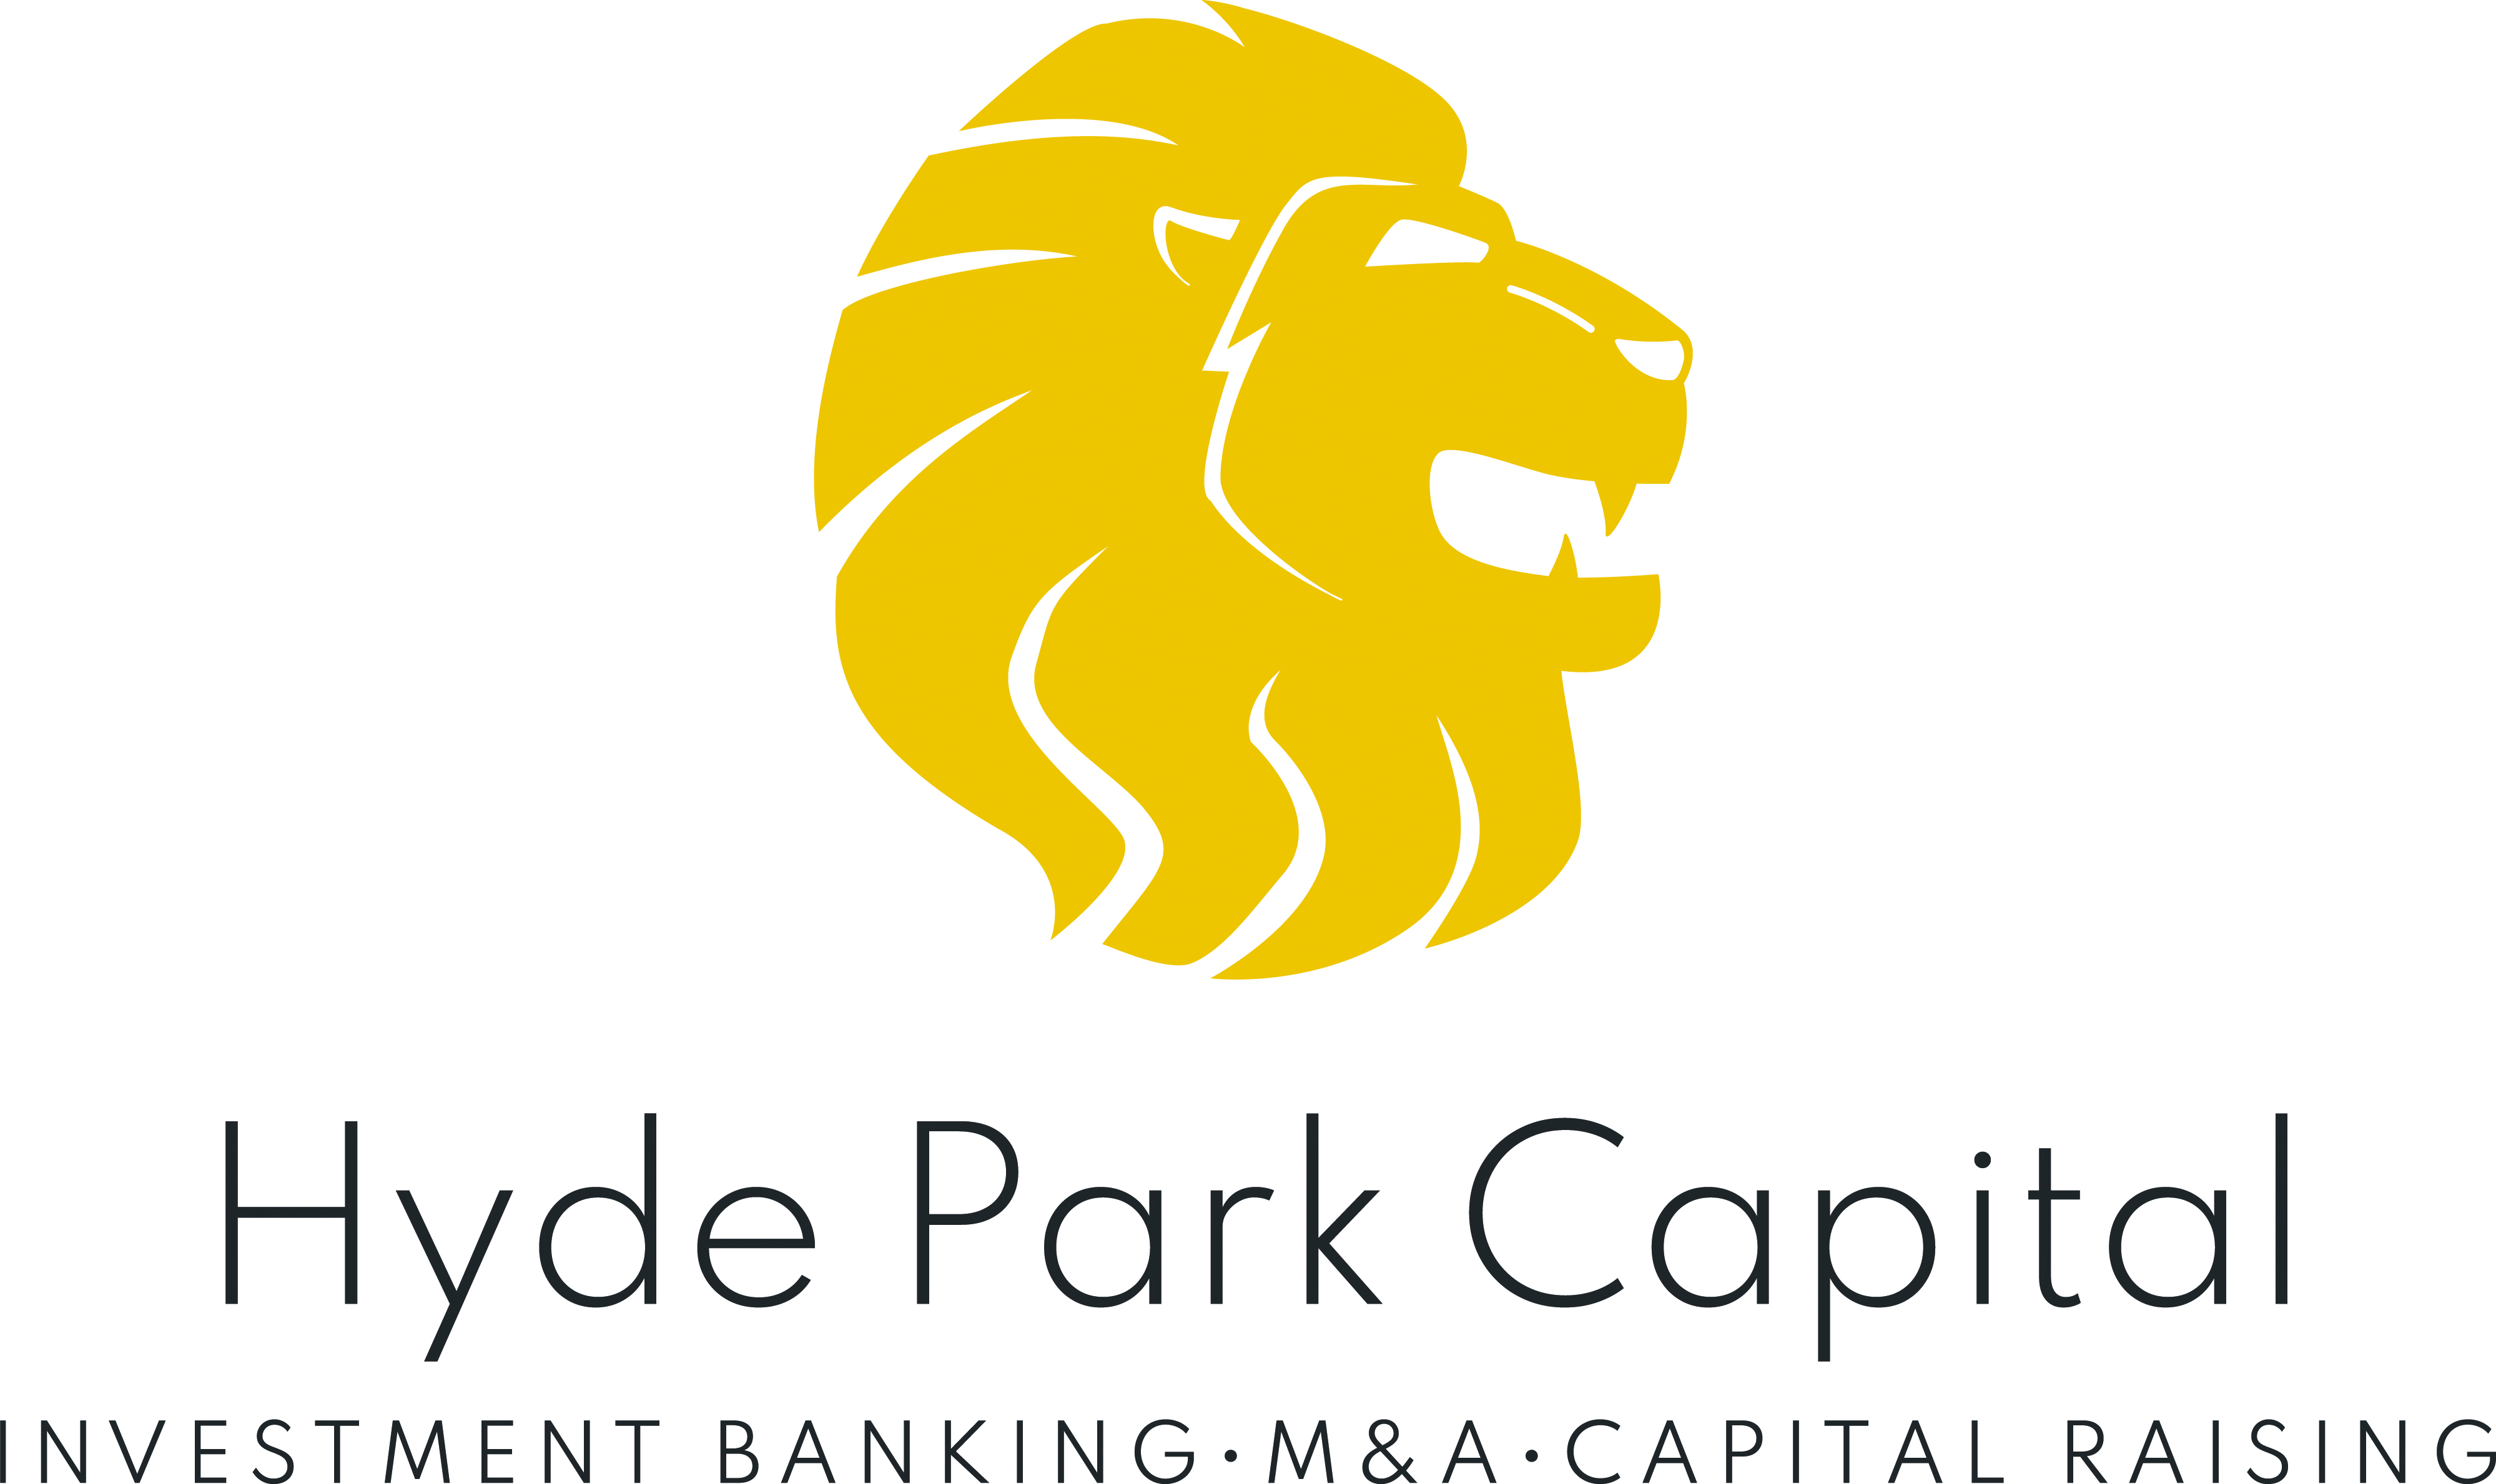 Welcome to Hyde Park Capital Advisors, LLC